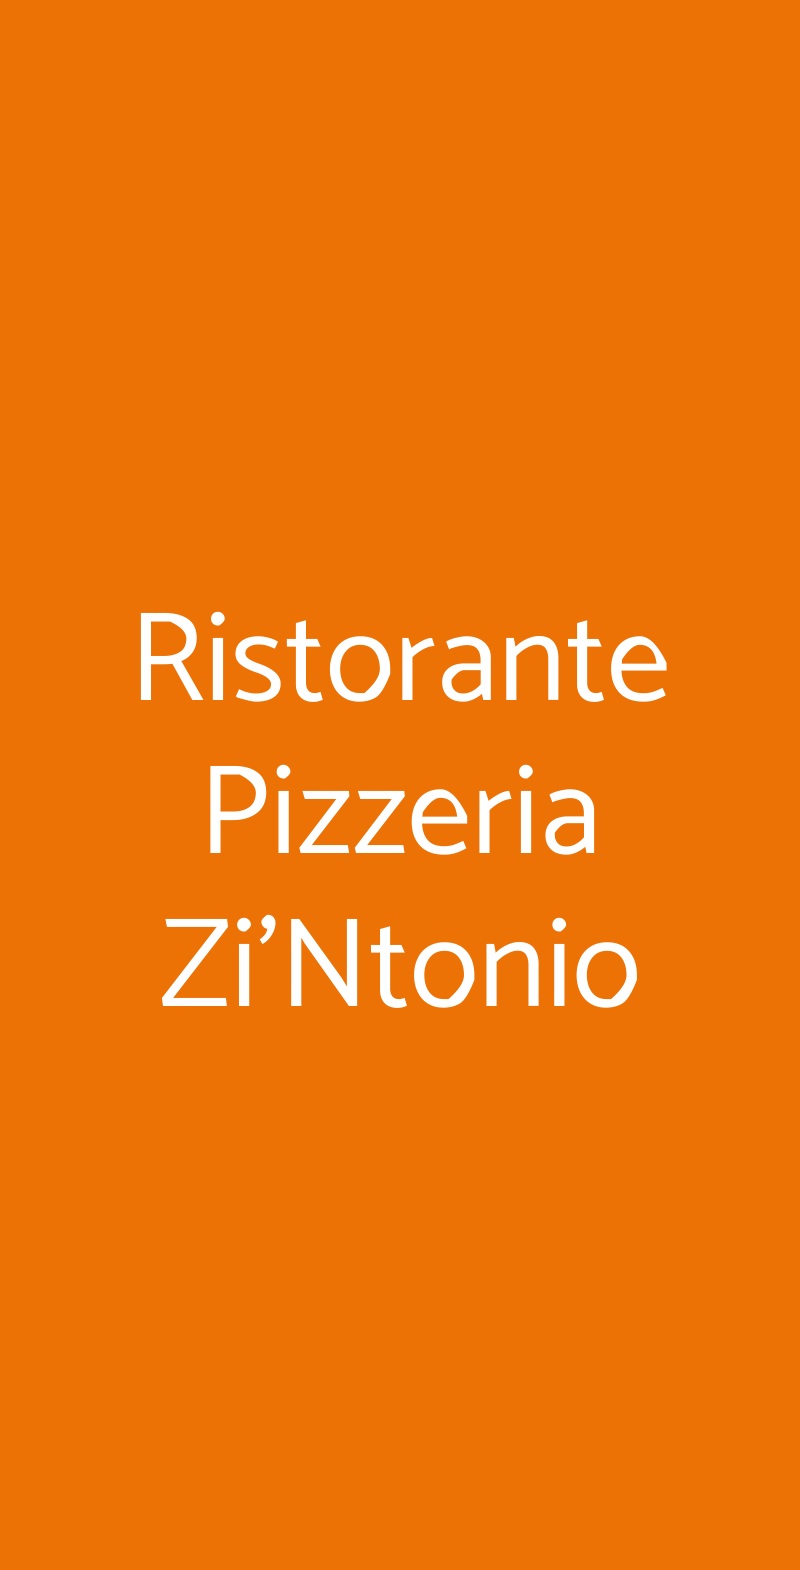 Ristorante Pizzeria Zi'Ntonio Sorrento menù 1 pagina